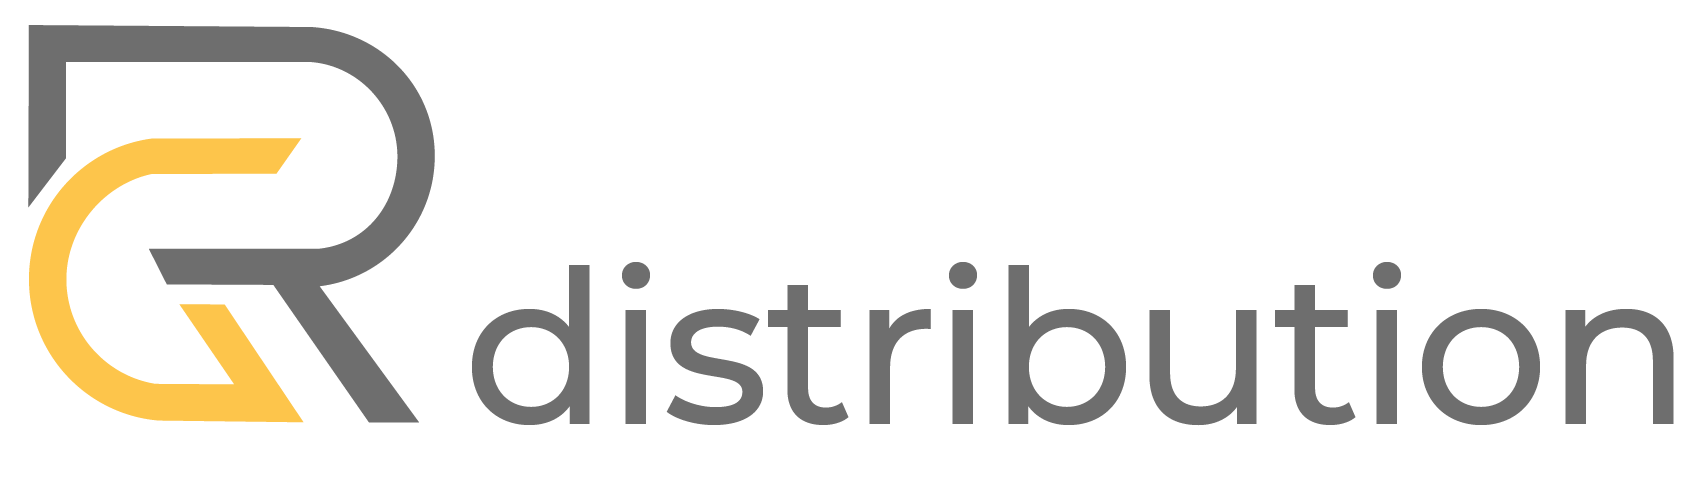 logo rg distribution